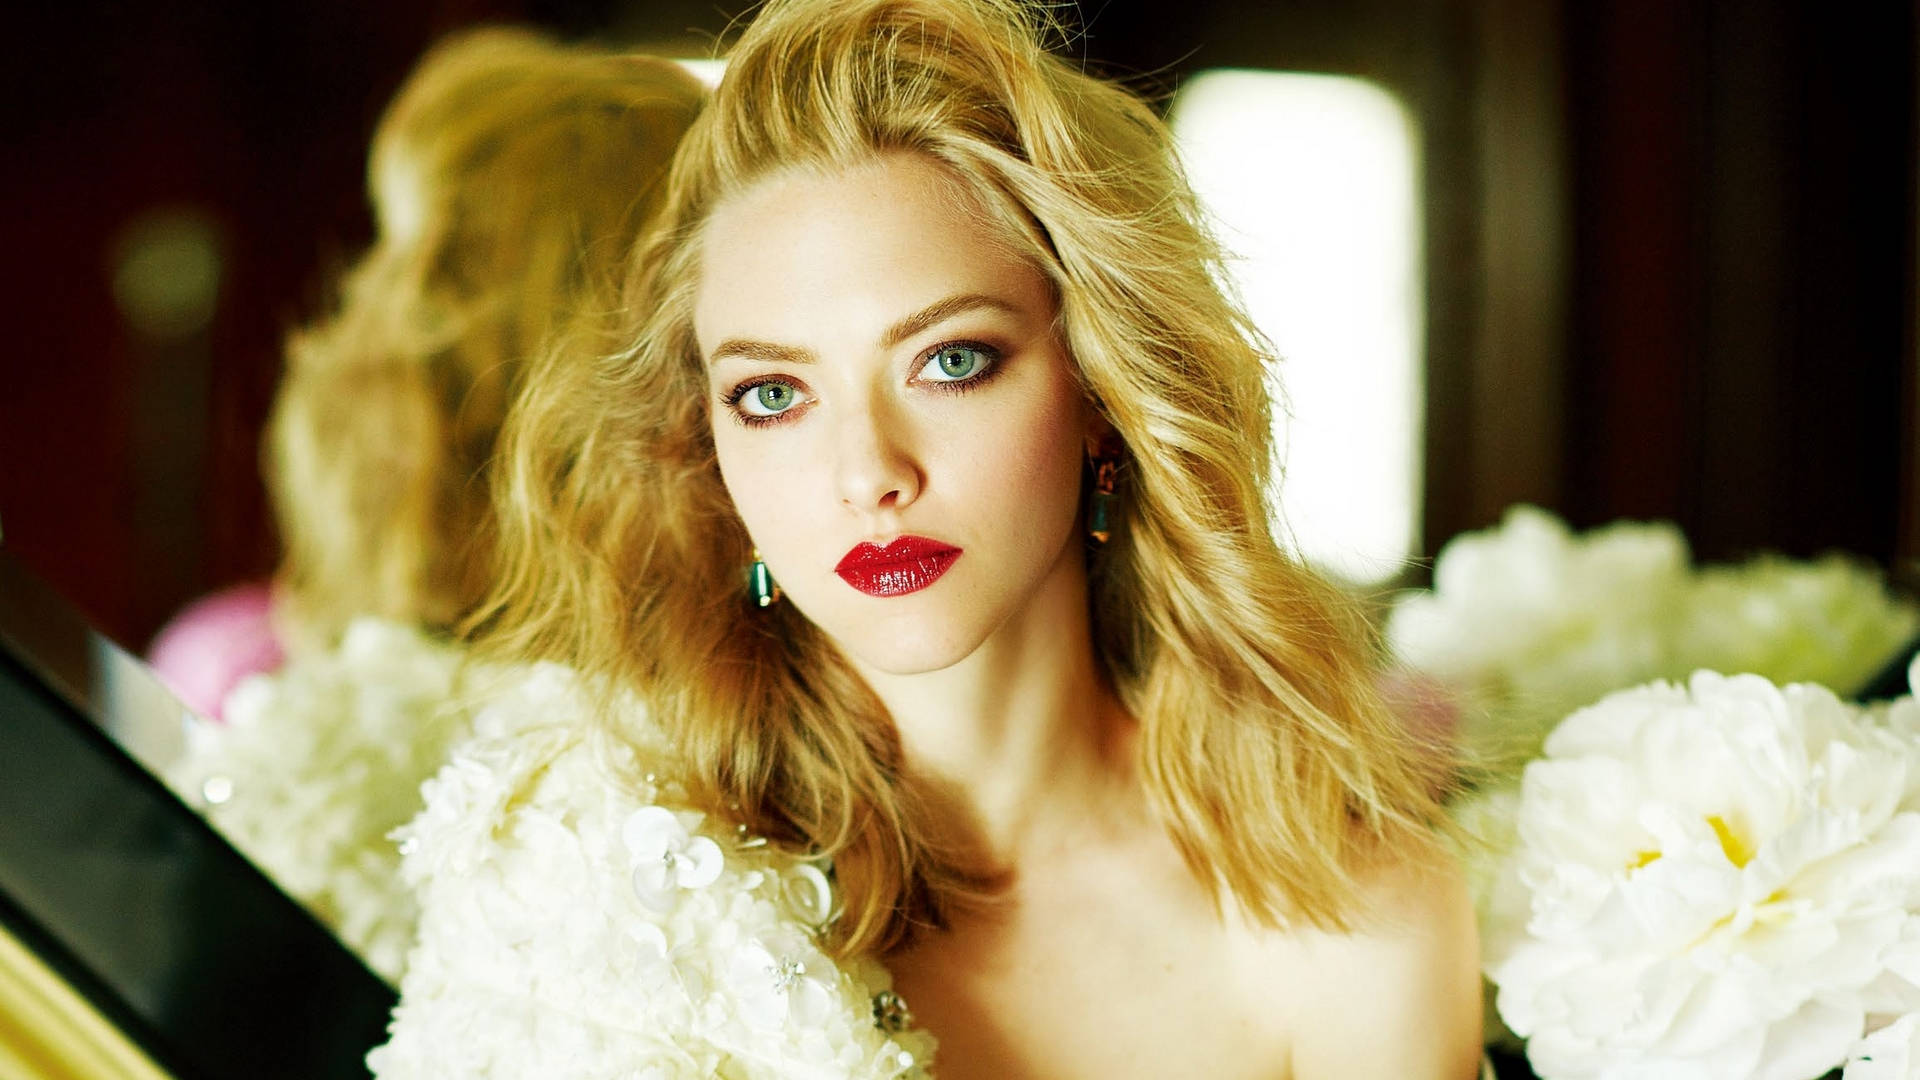 Beautiful Blonde Wearing Red Lipstick Wallpaper